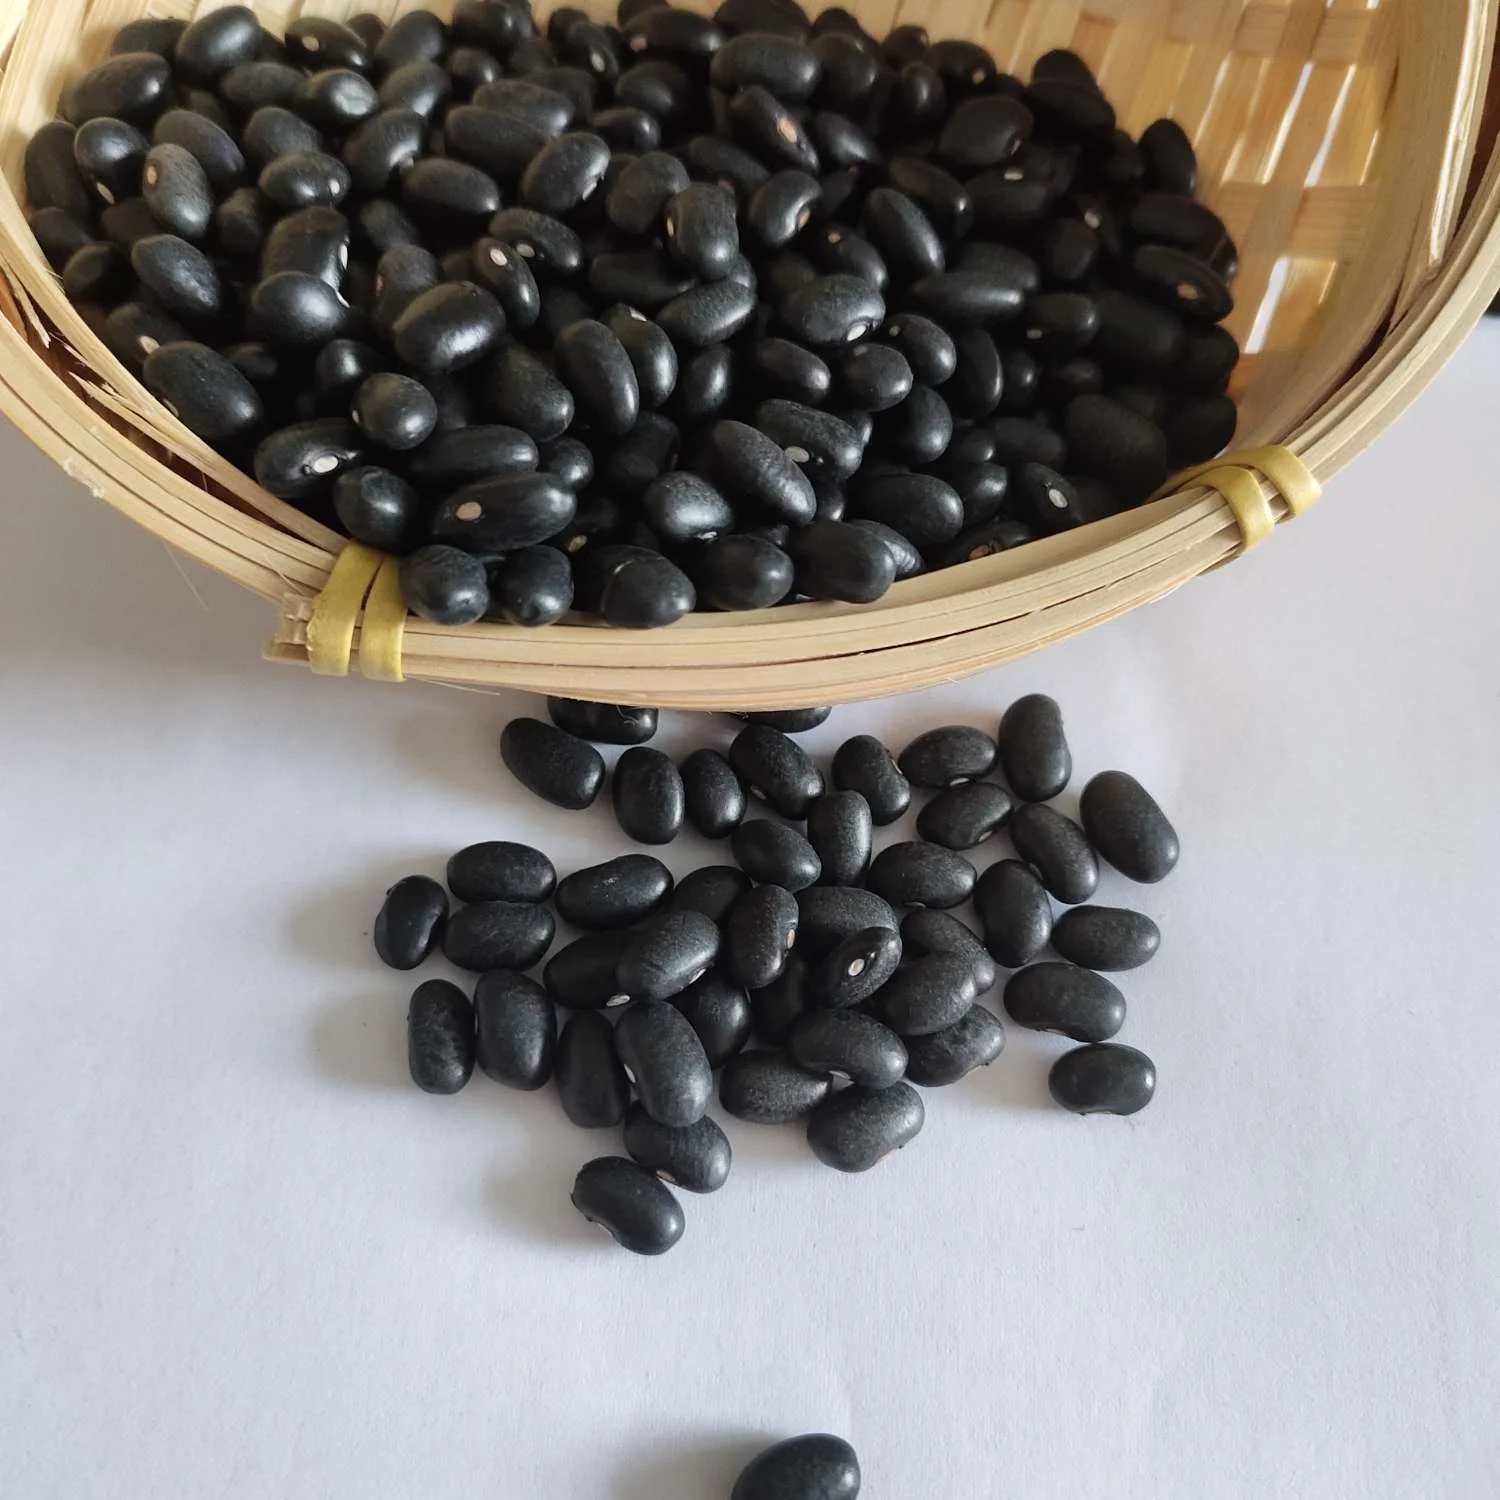 
Best quality black kidney beans dry black beans for sale 